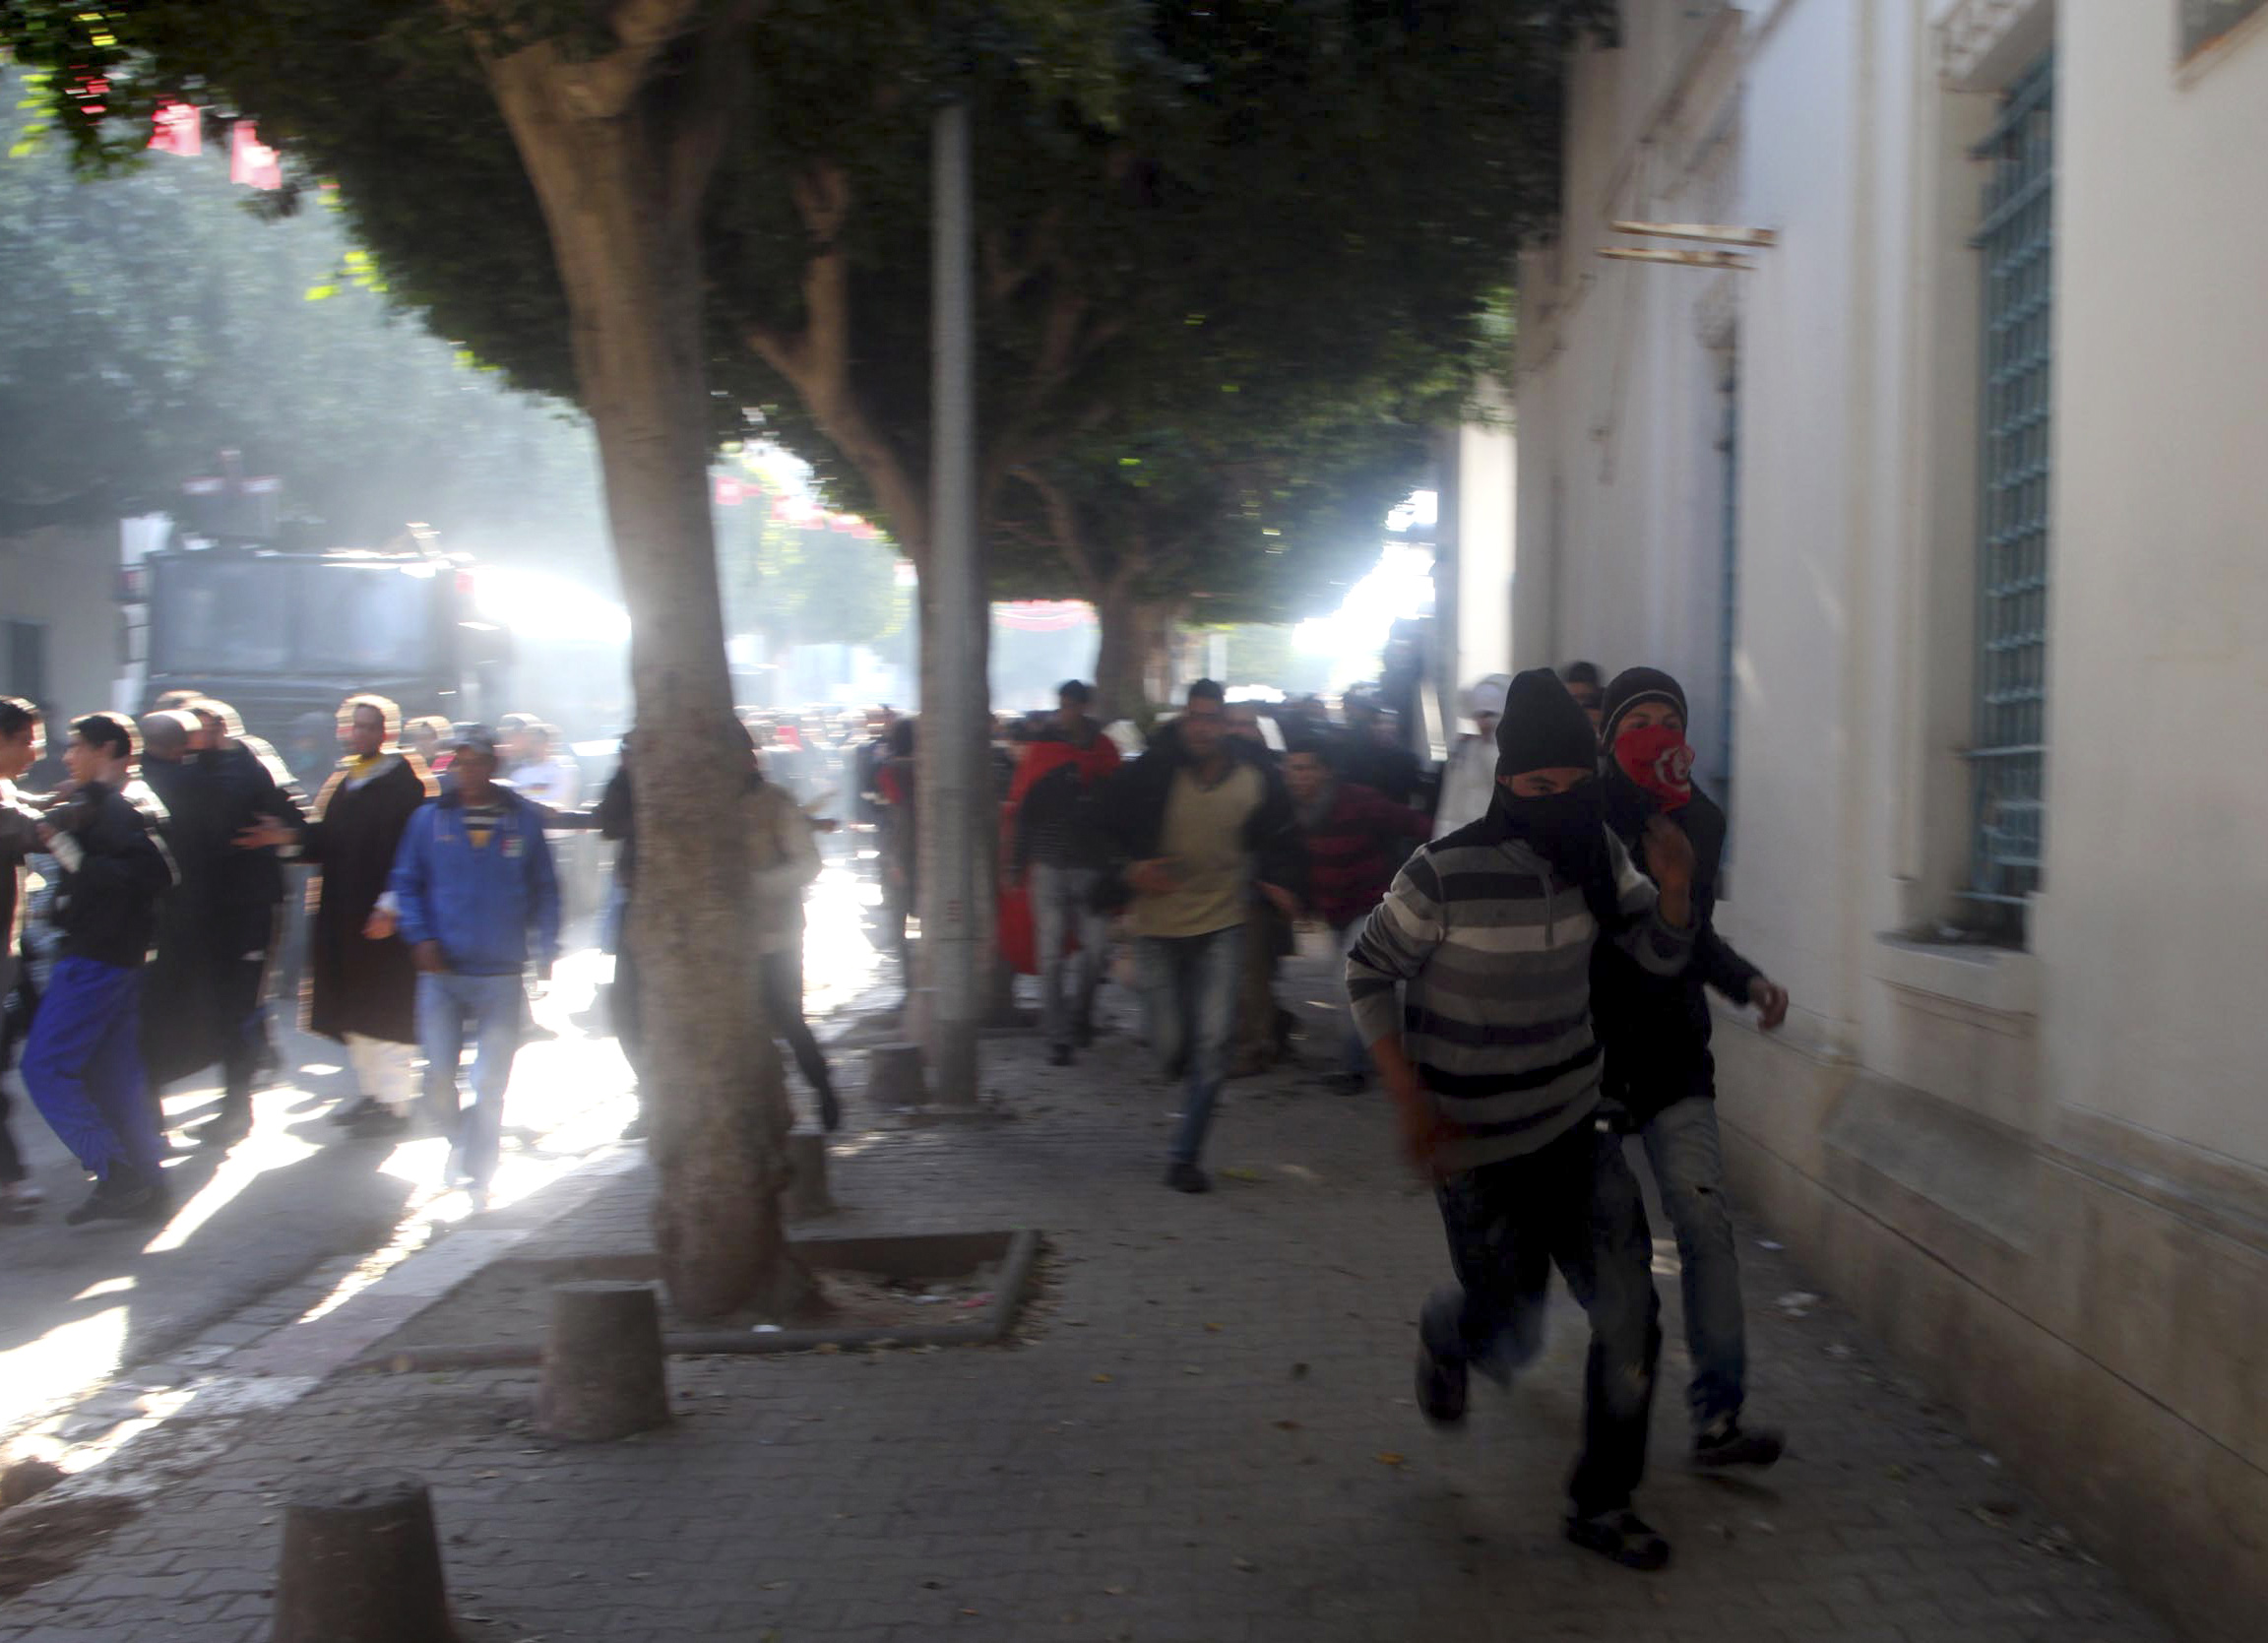 Jasminrevolutionen, Zine El Abidine Ben Ali, Tunisien, Upplopp, Kravaller, Uppror, Demonstration